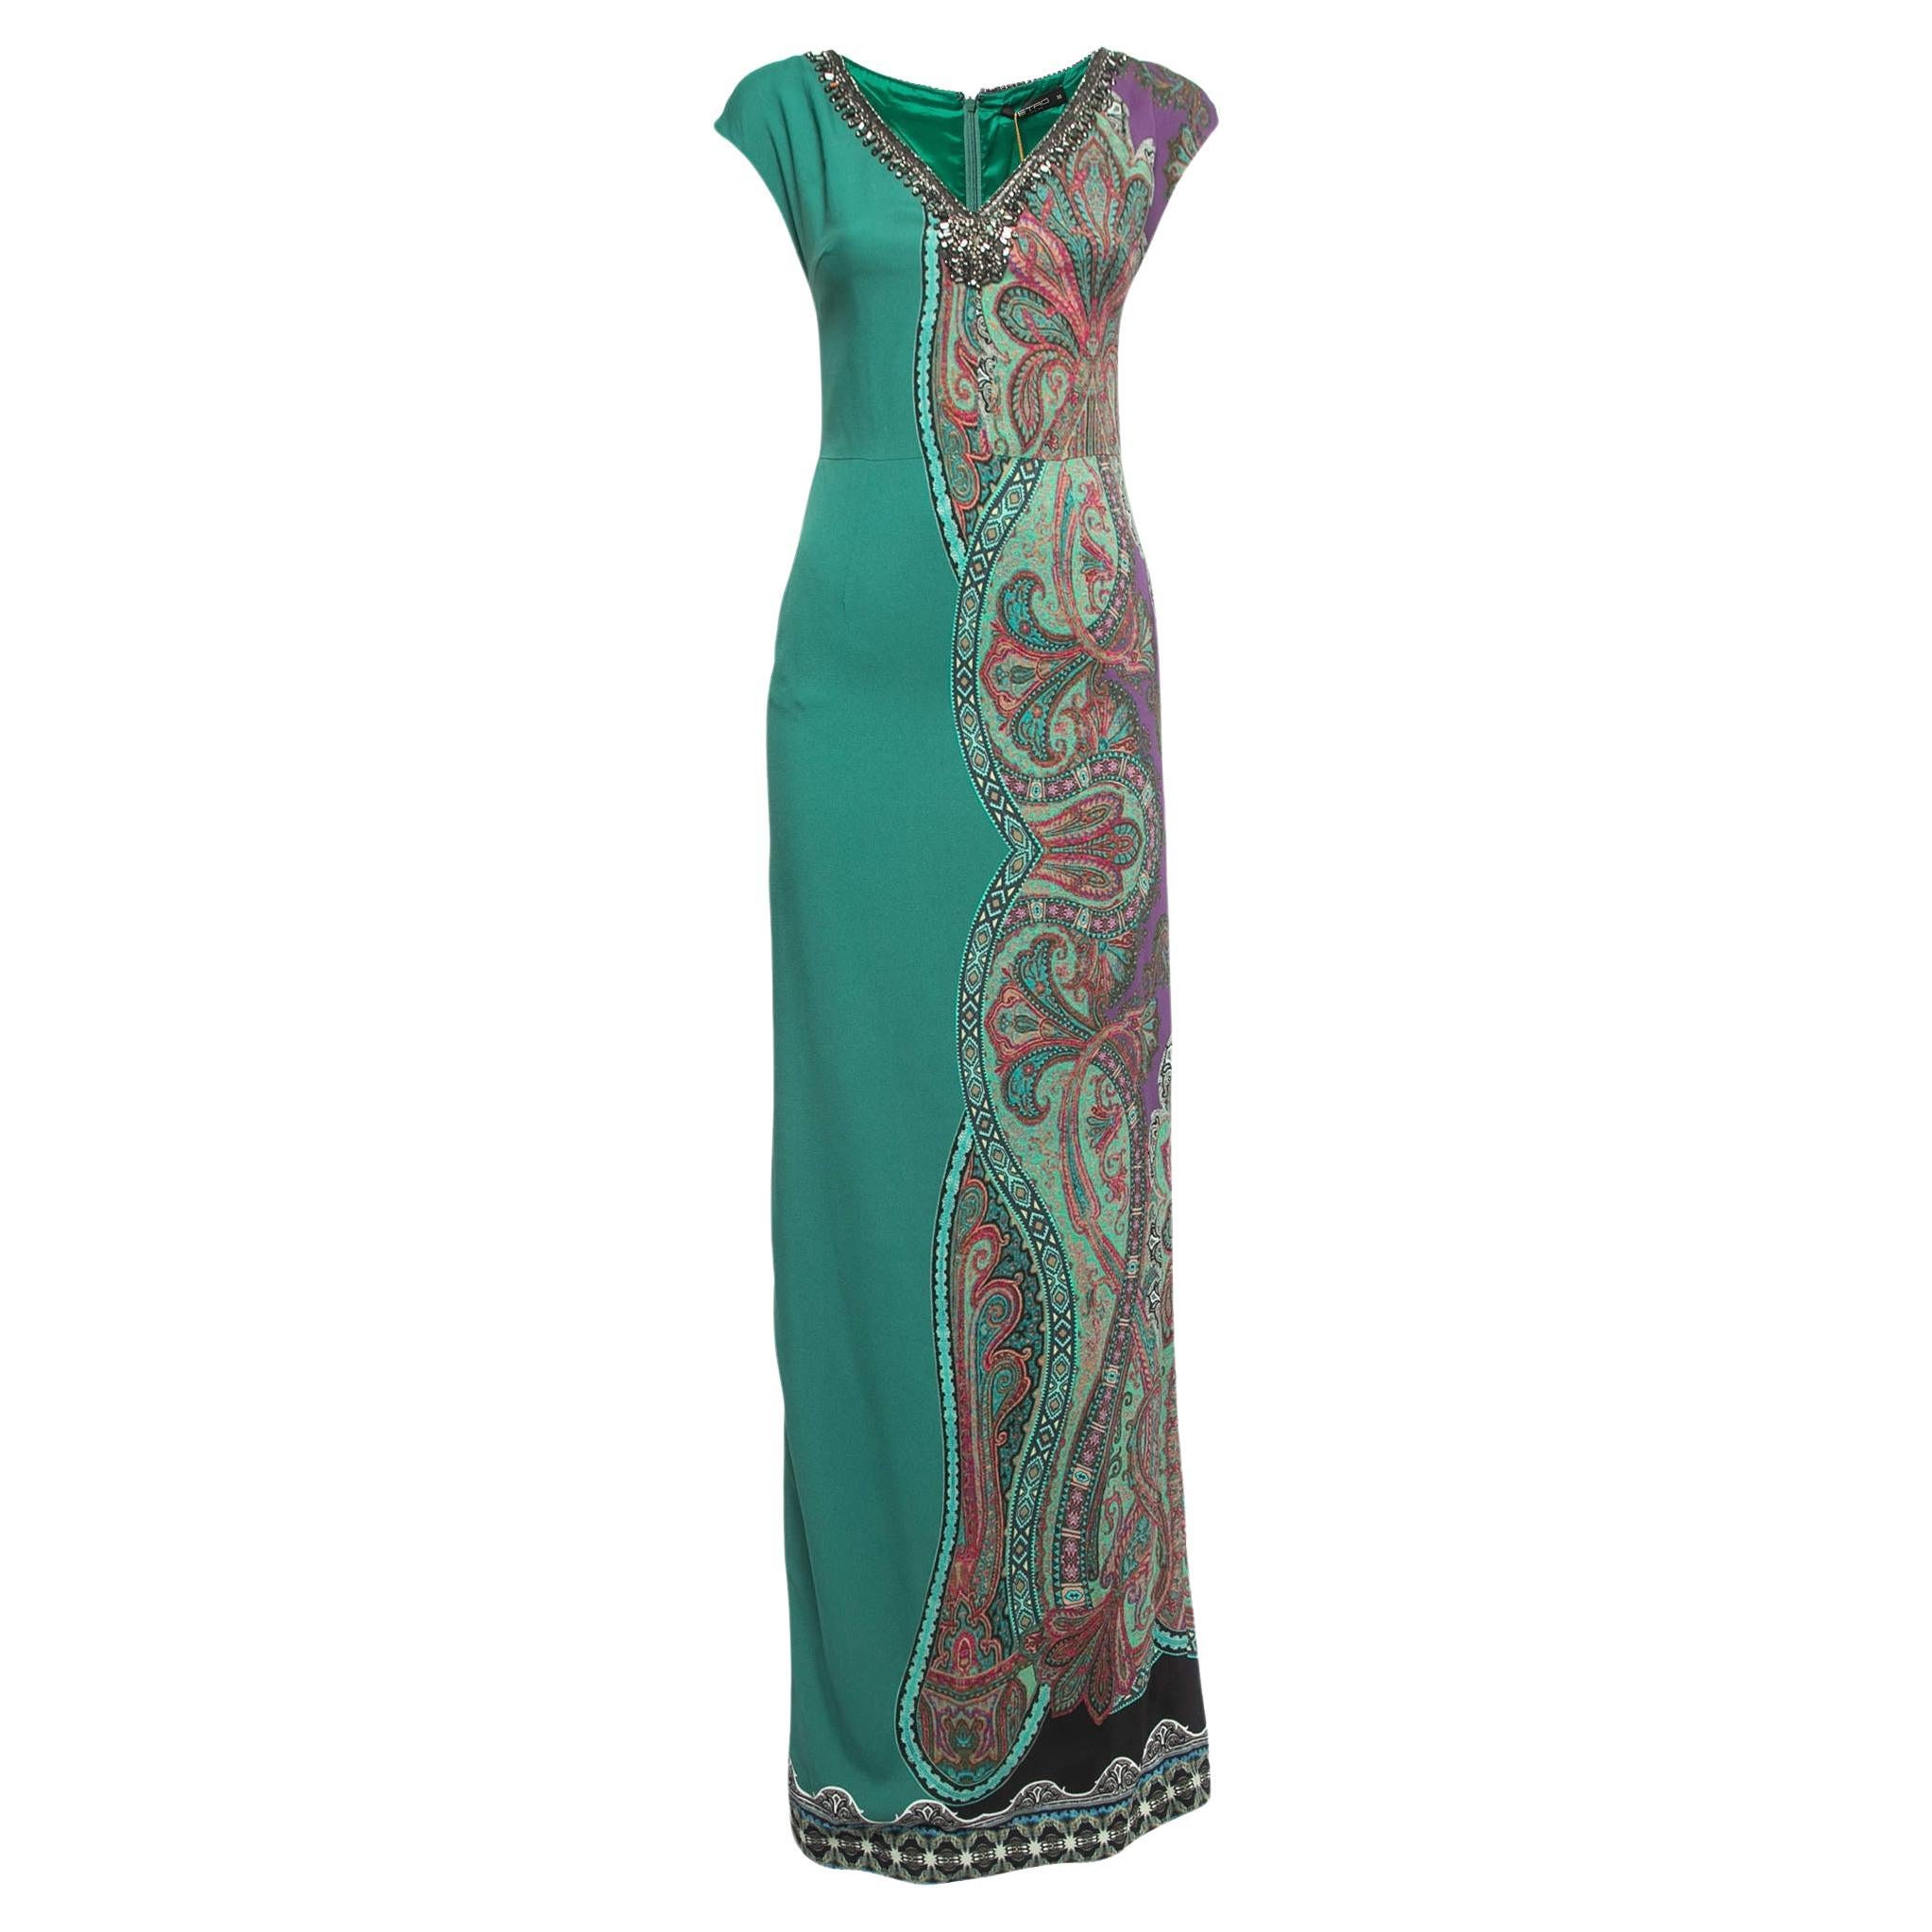 Etro Green Paisley Printed Crepe Embellished Maxi Dress 